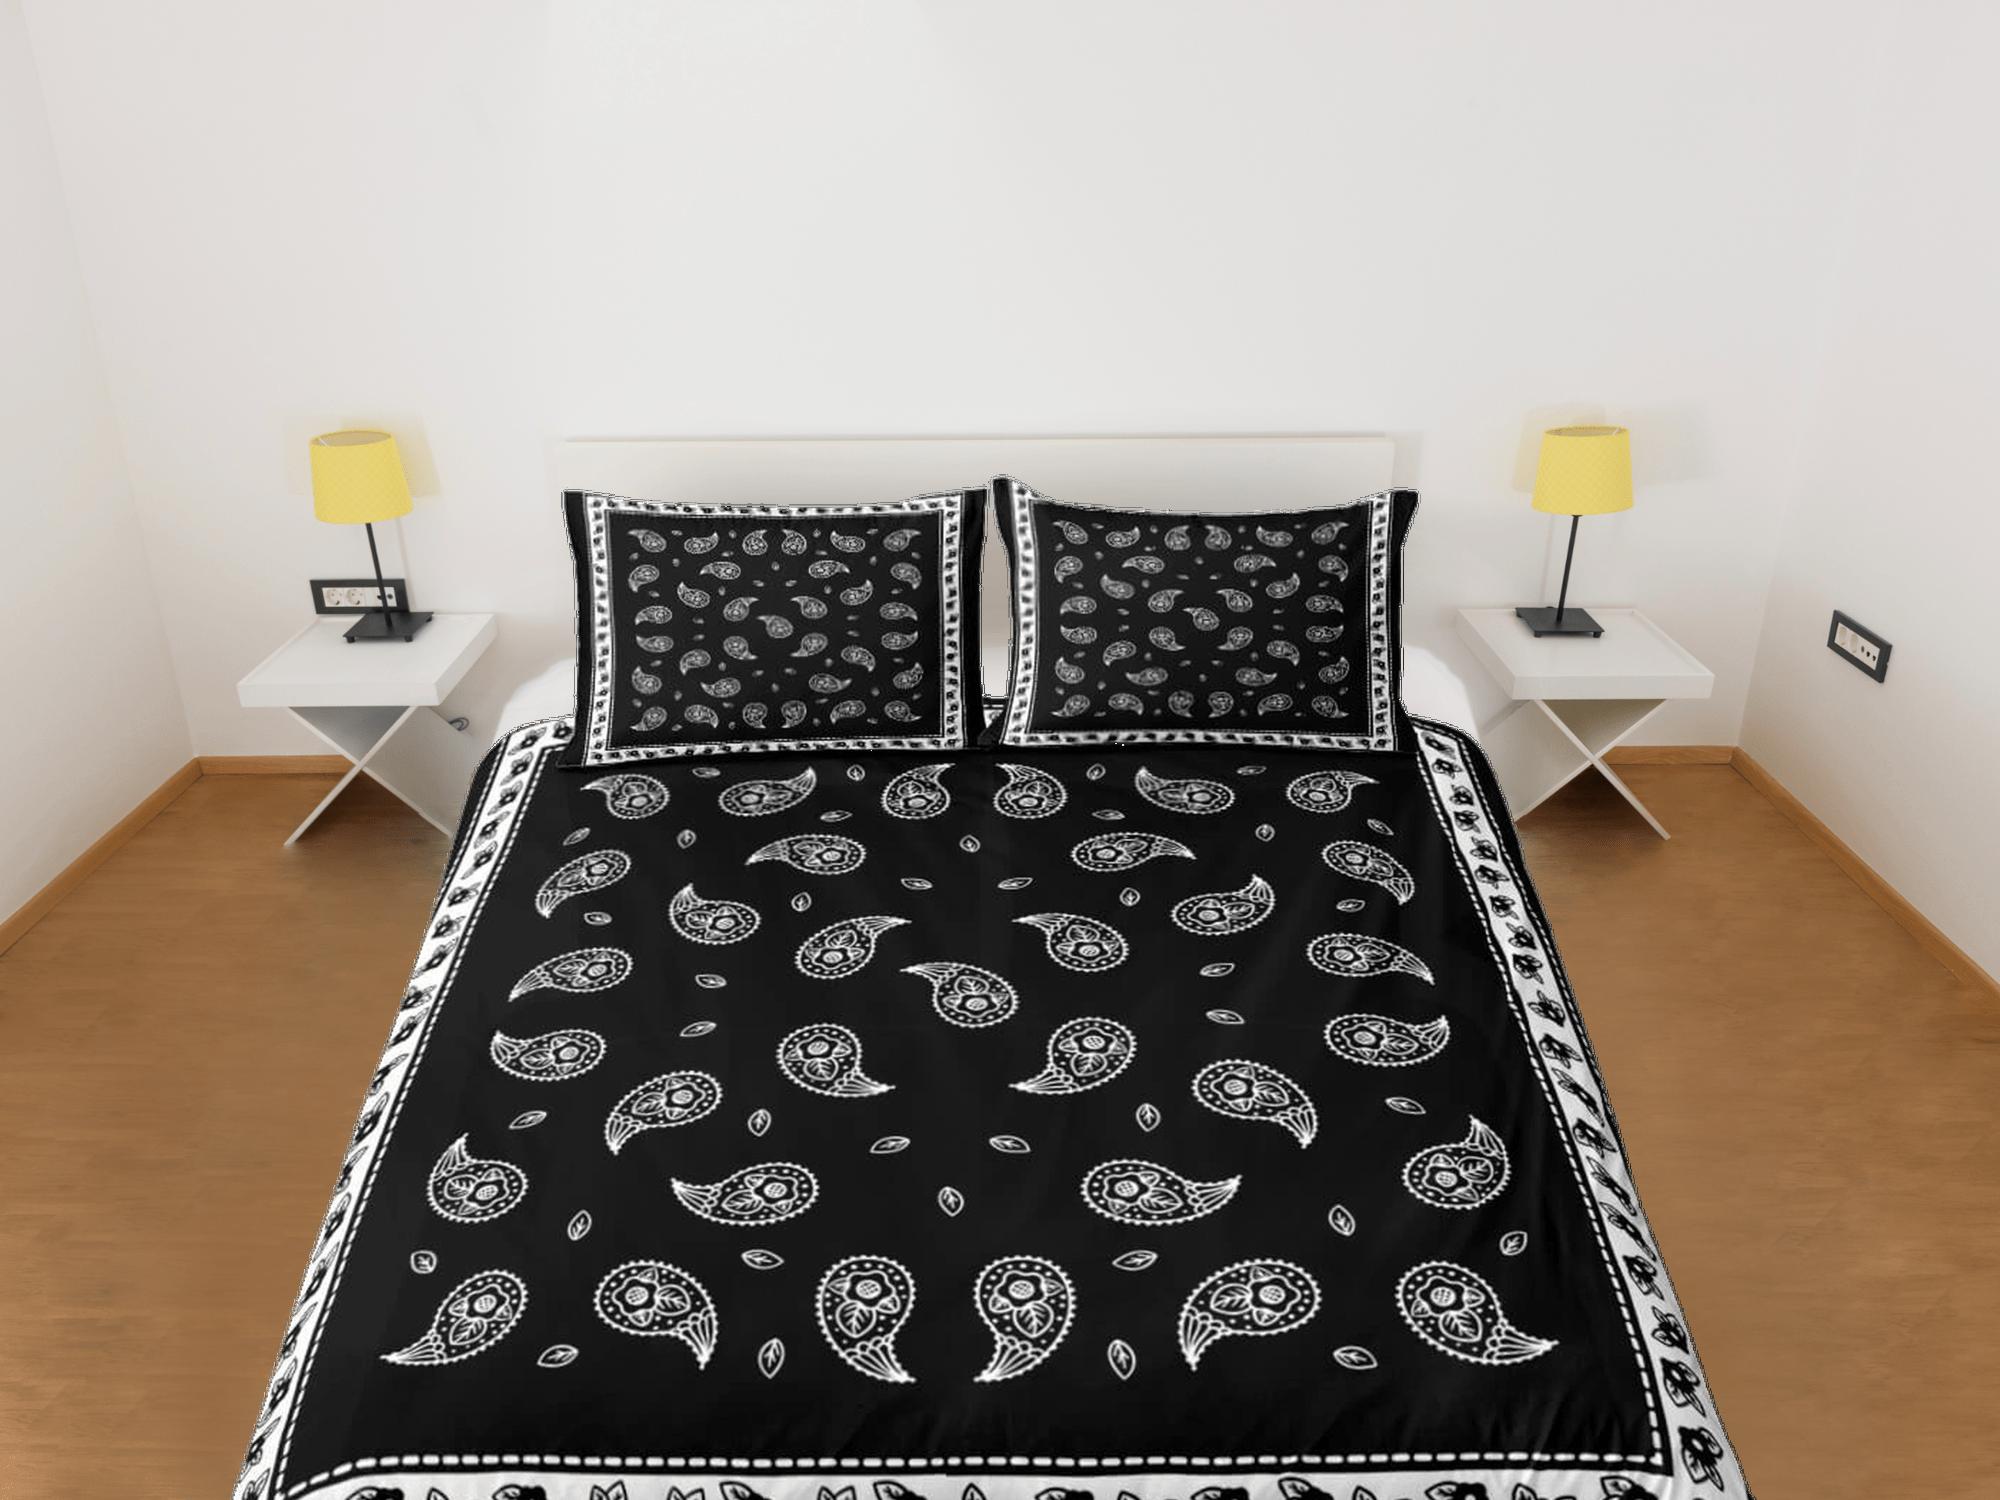 daintyduvet Black bandana paisley duvet cover set, aesthetic room decor bedding set full, king, queen size, abstract boho bedspread, luxury bed cover